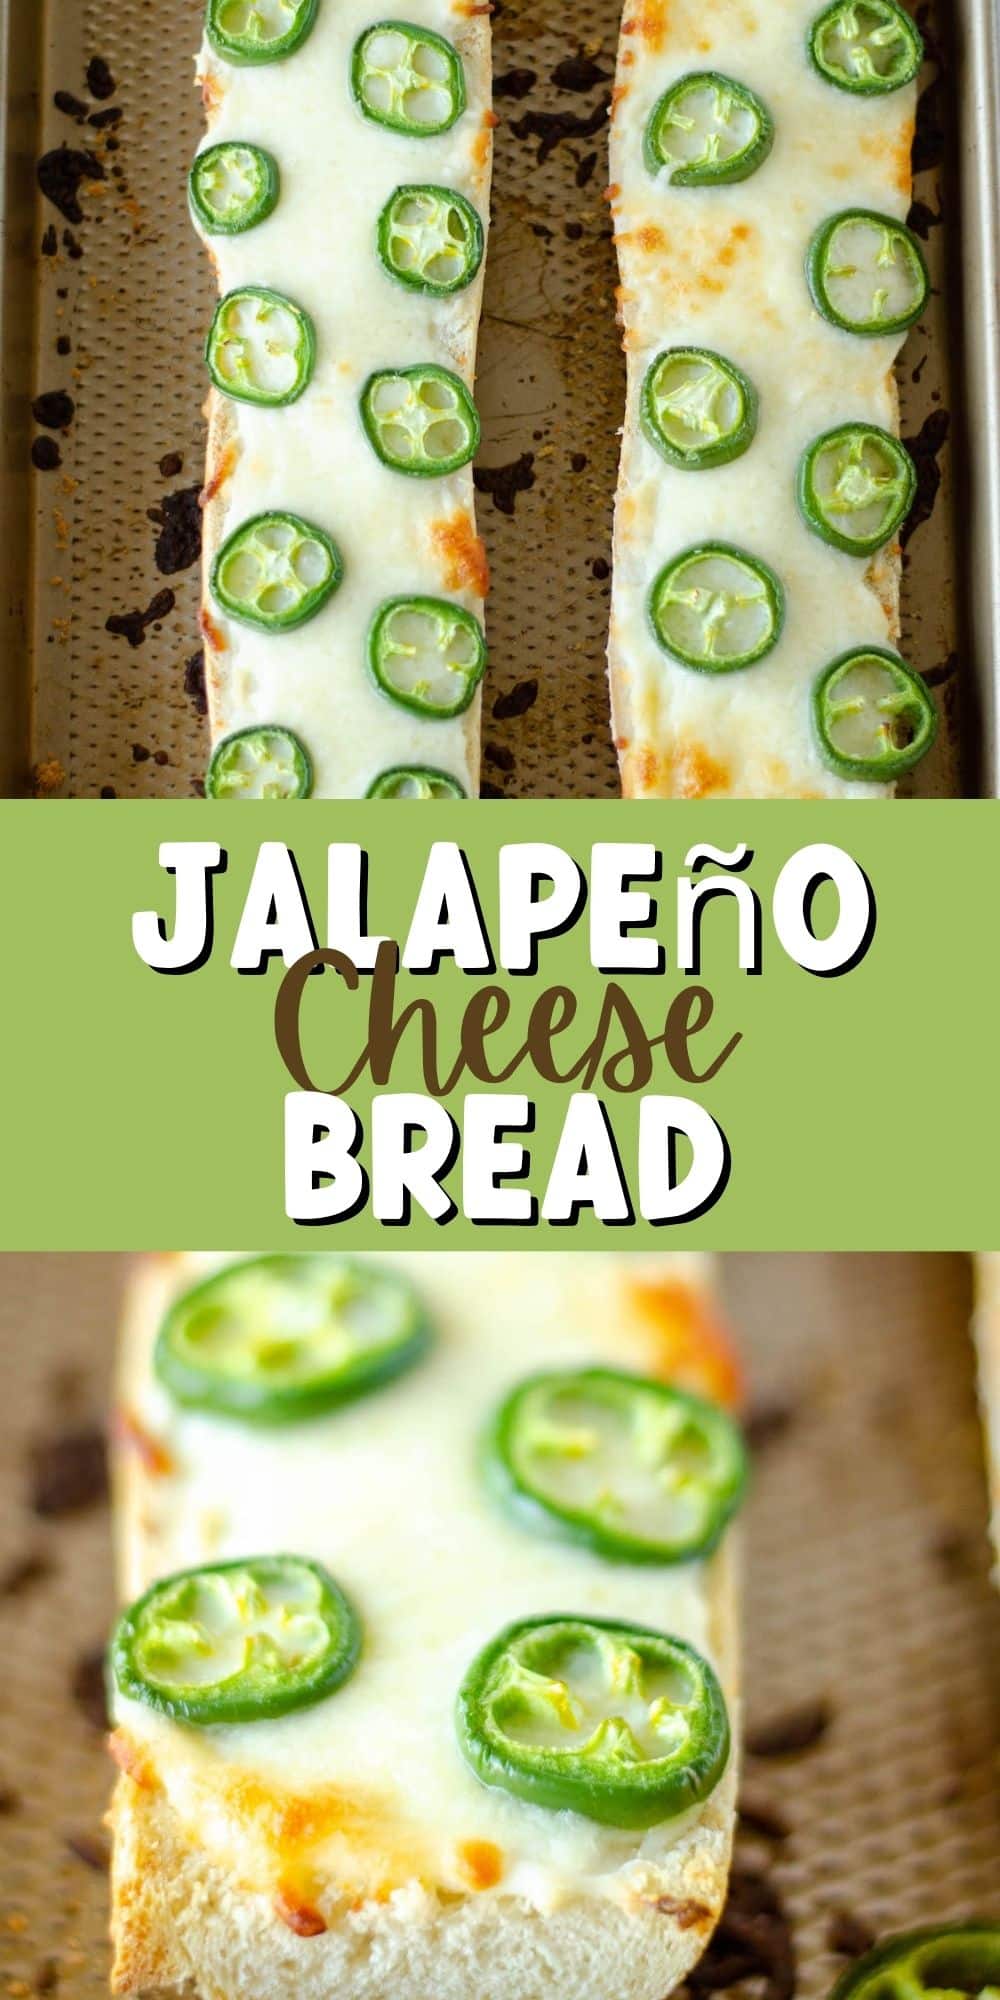 https://www.crazyforcrust.com/wp-content/uploads/2022/12/jalapeno-cheese-bread_collage.jpg